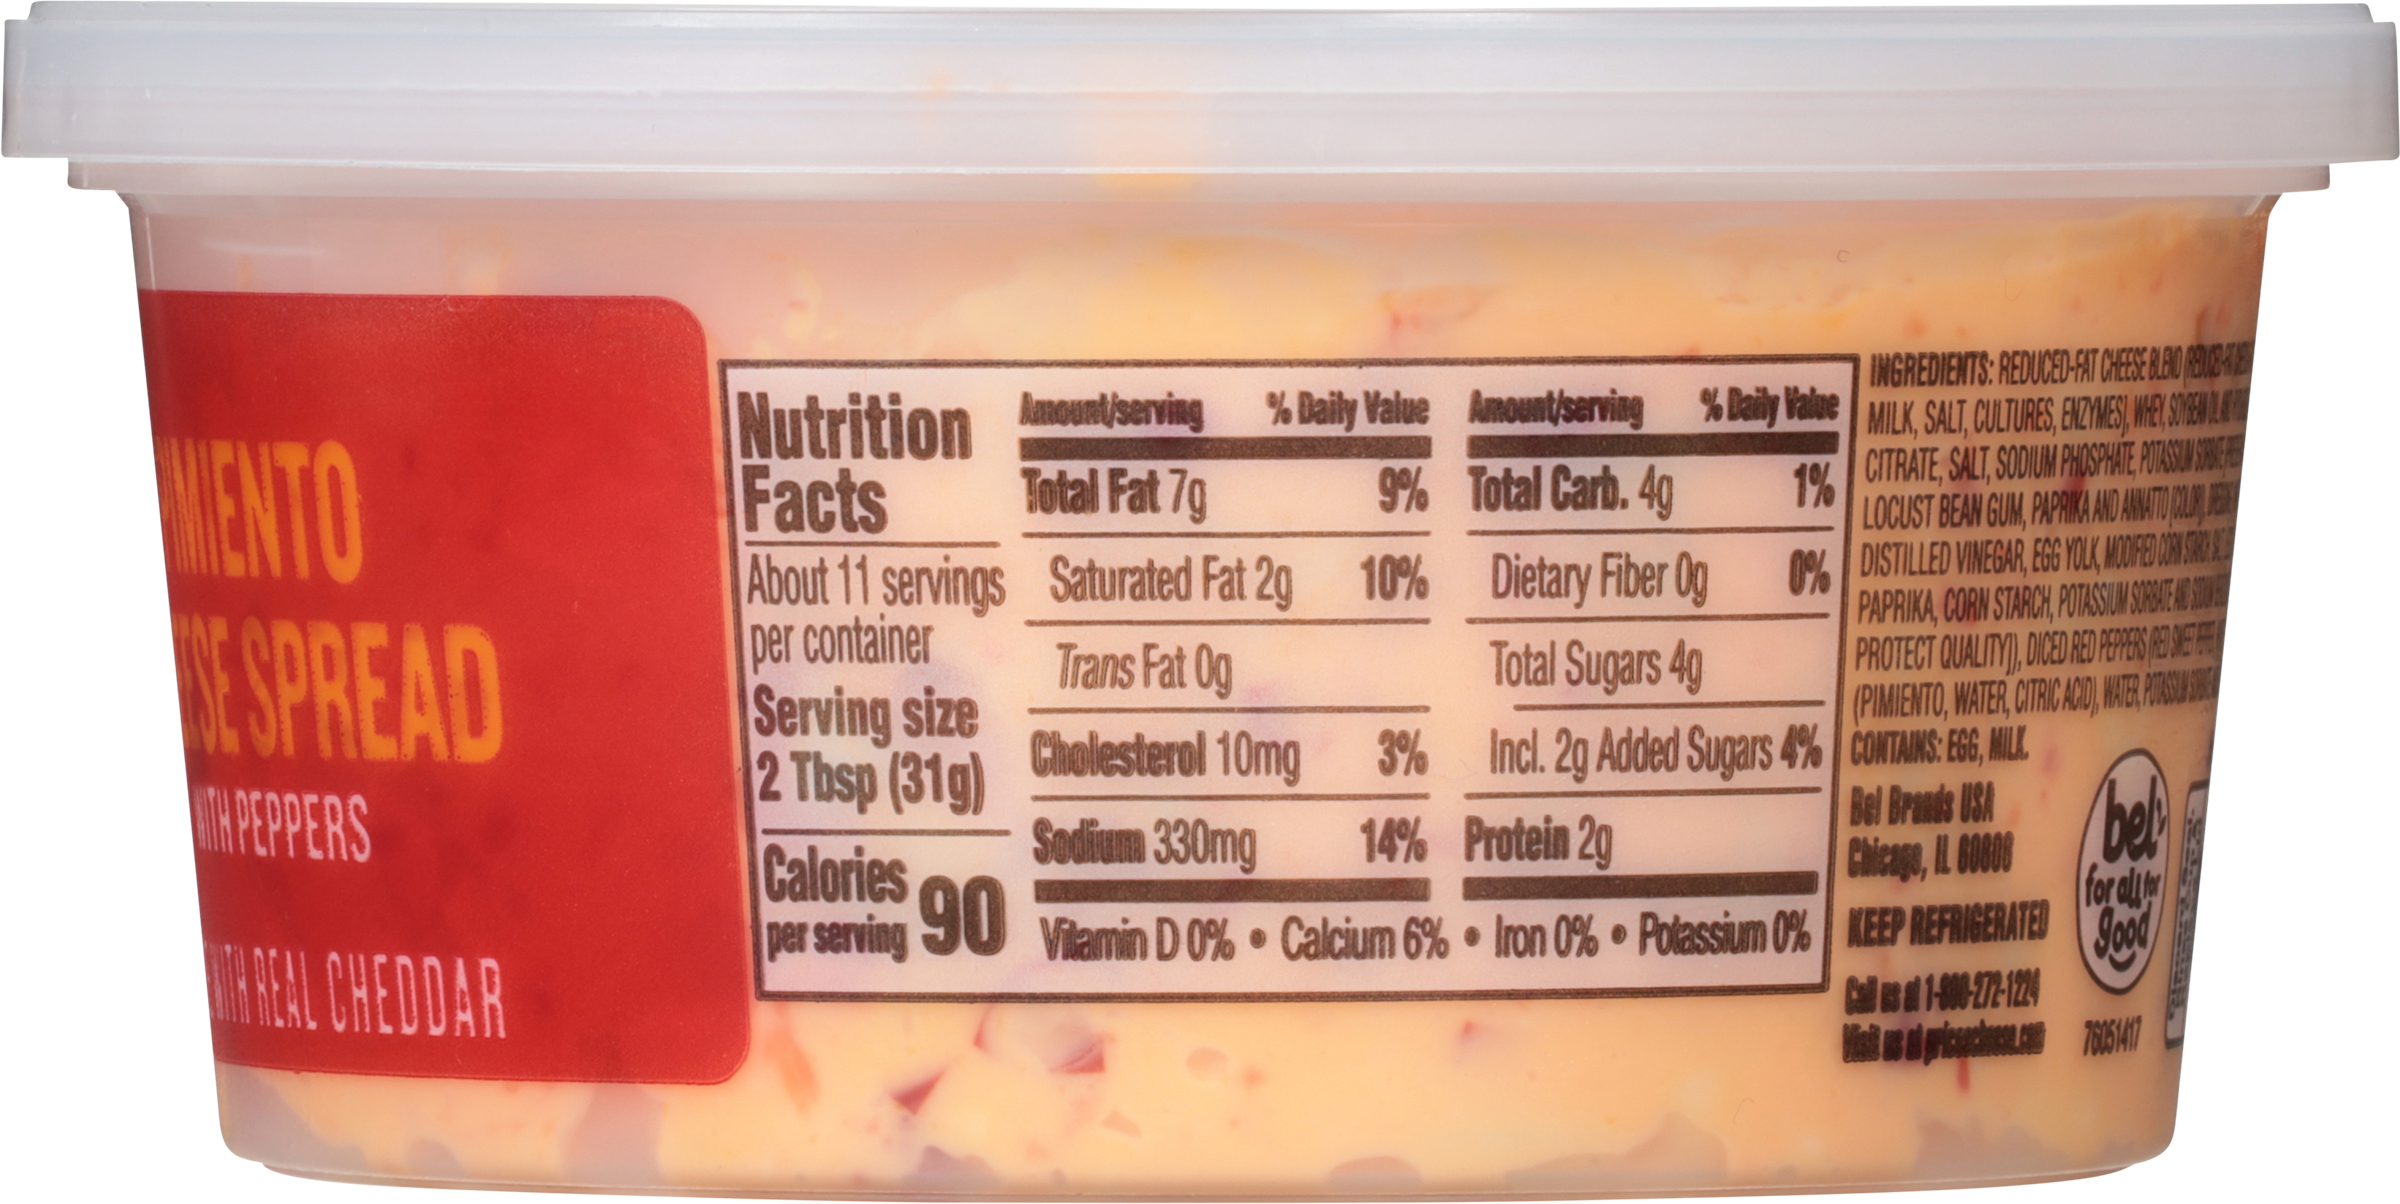 Price's Original Flavored Pimiento Cheese Spread, 12 oz., Tub, Refrigerated - image 2 of 6